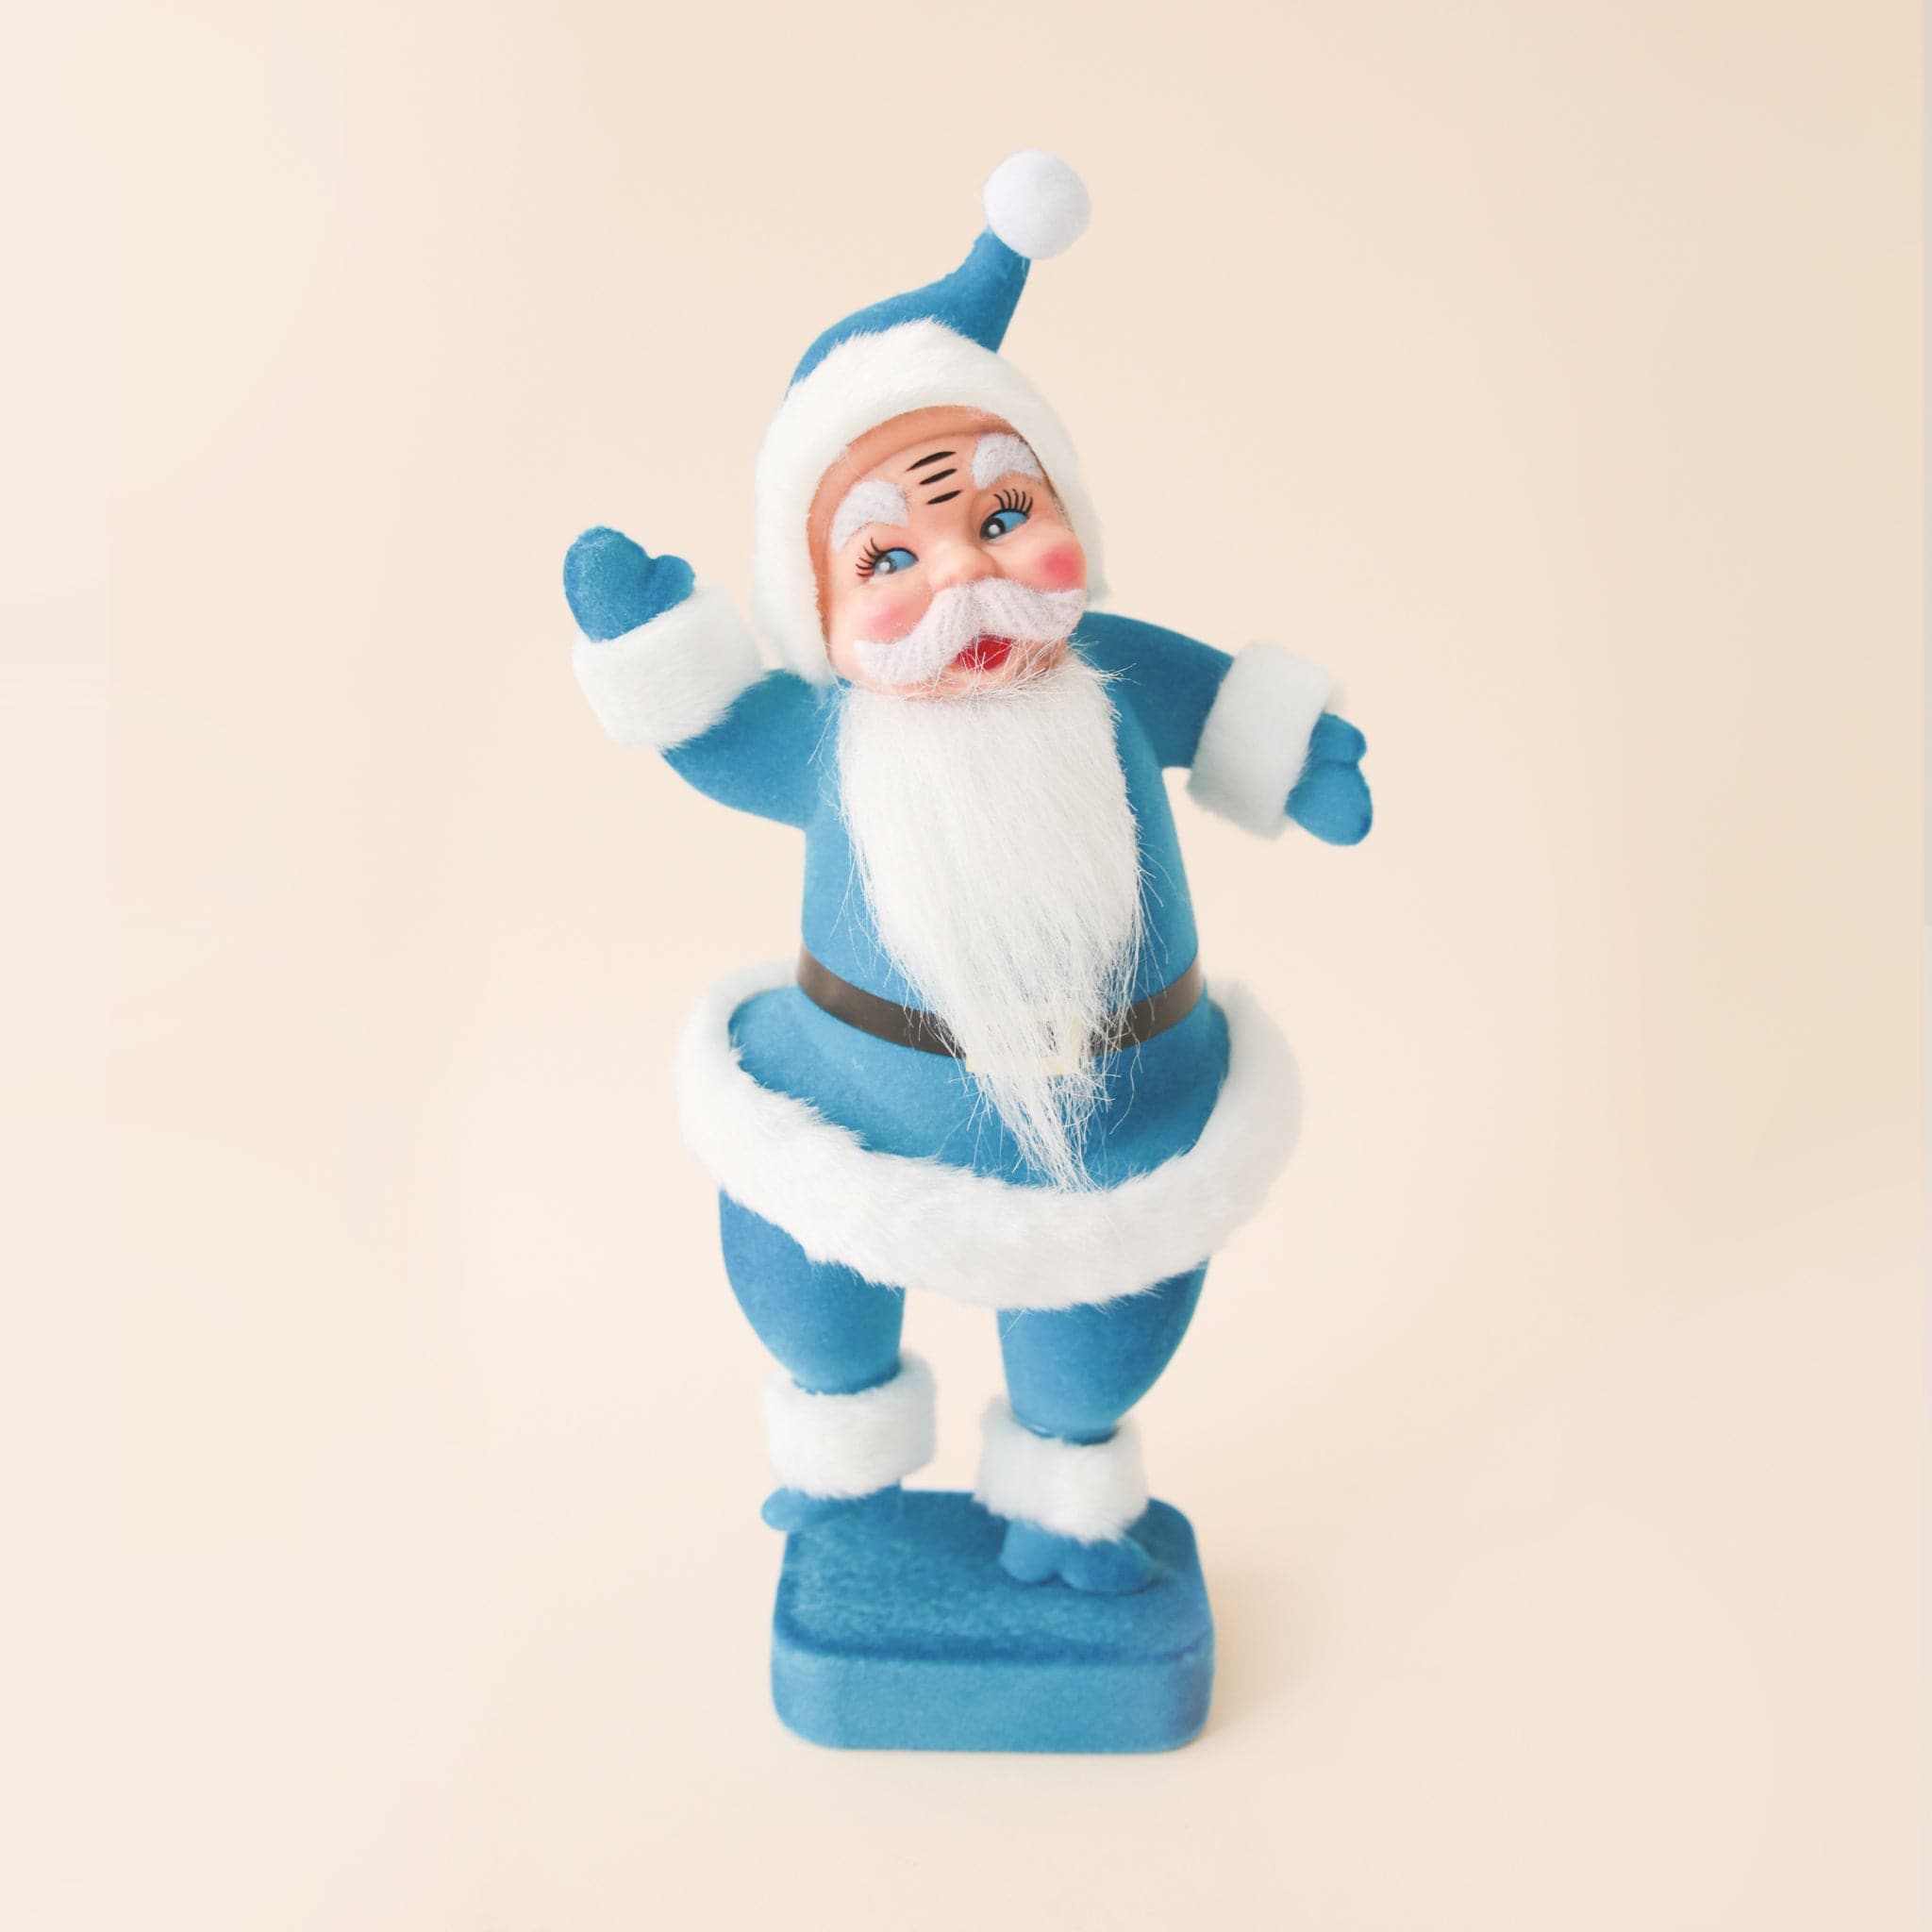 A blue Santa Christmas decoration with blue velvet suit on.